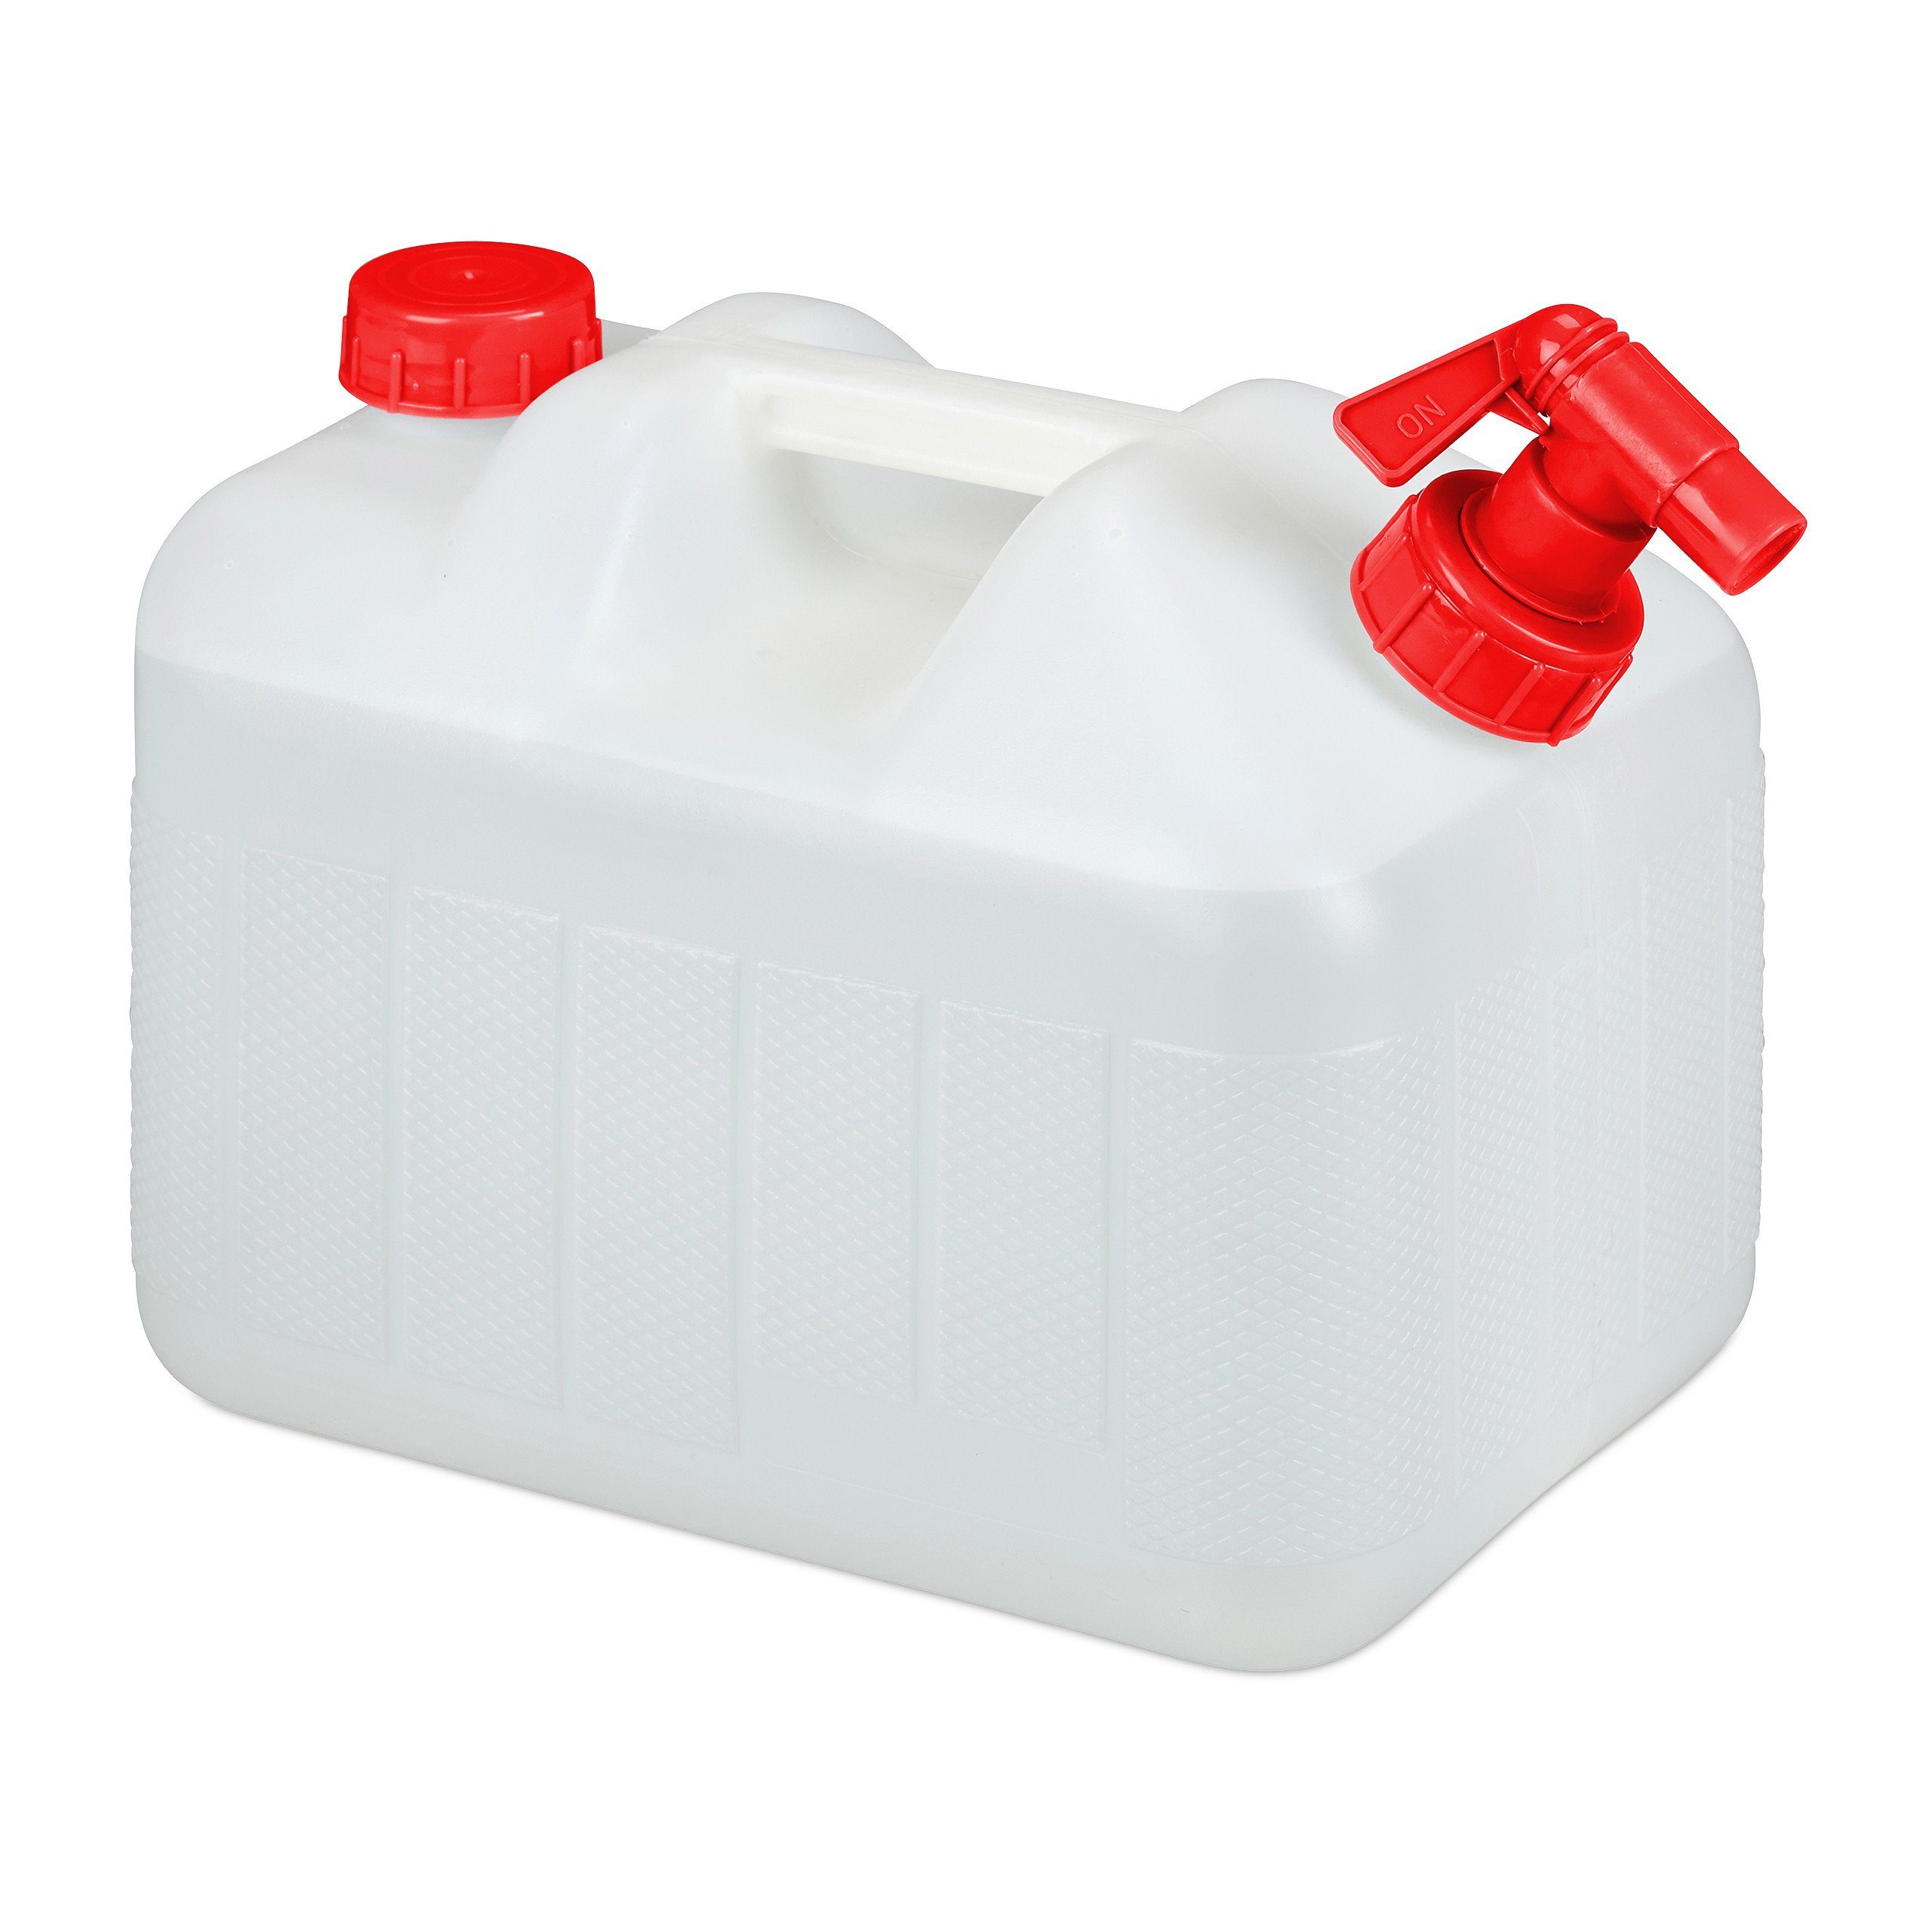 10 Hahn, relaxdays Wasserkanister Liter Kanister mit